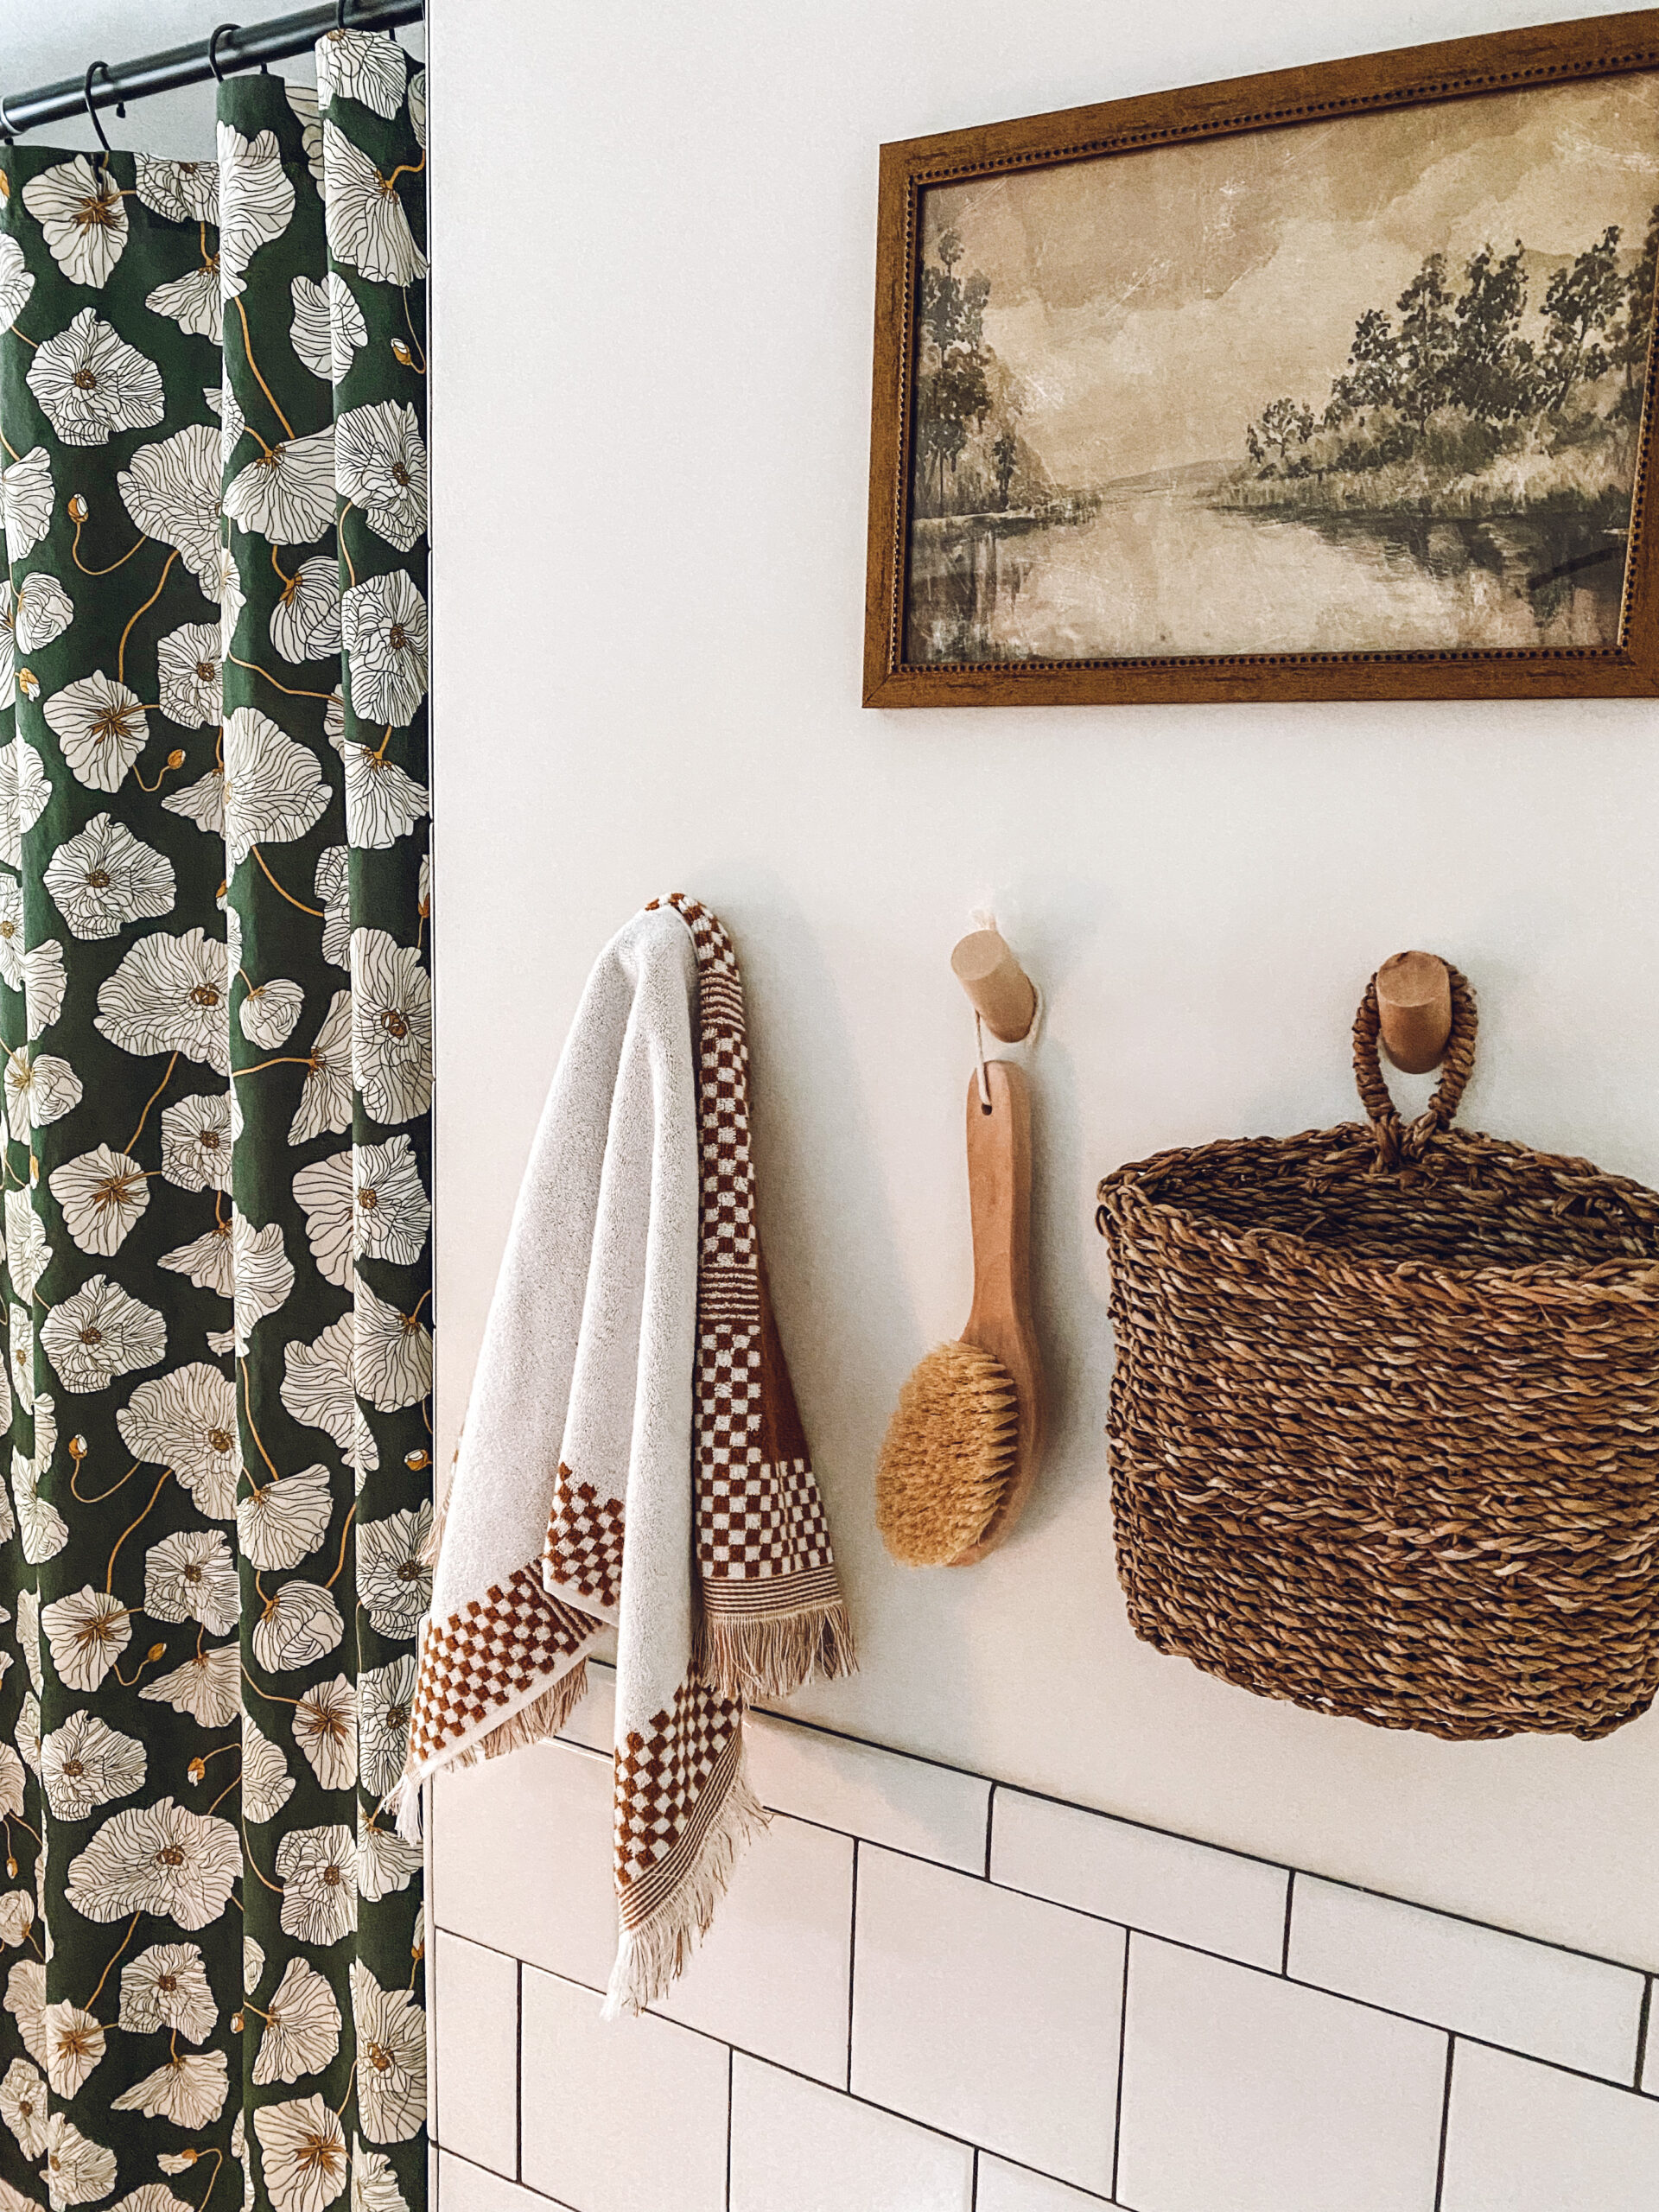 Towel, bath brush and basket hanging on hook